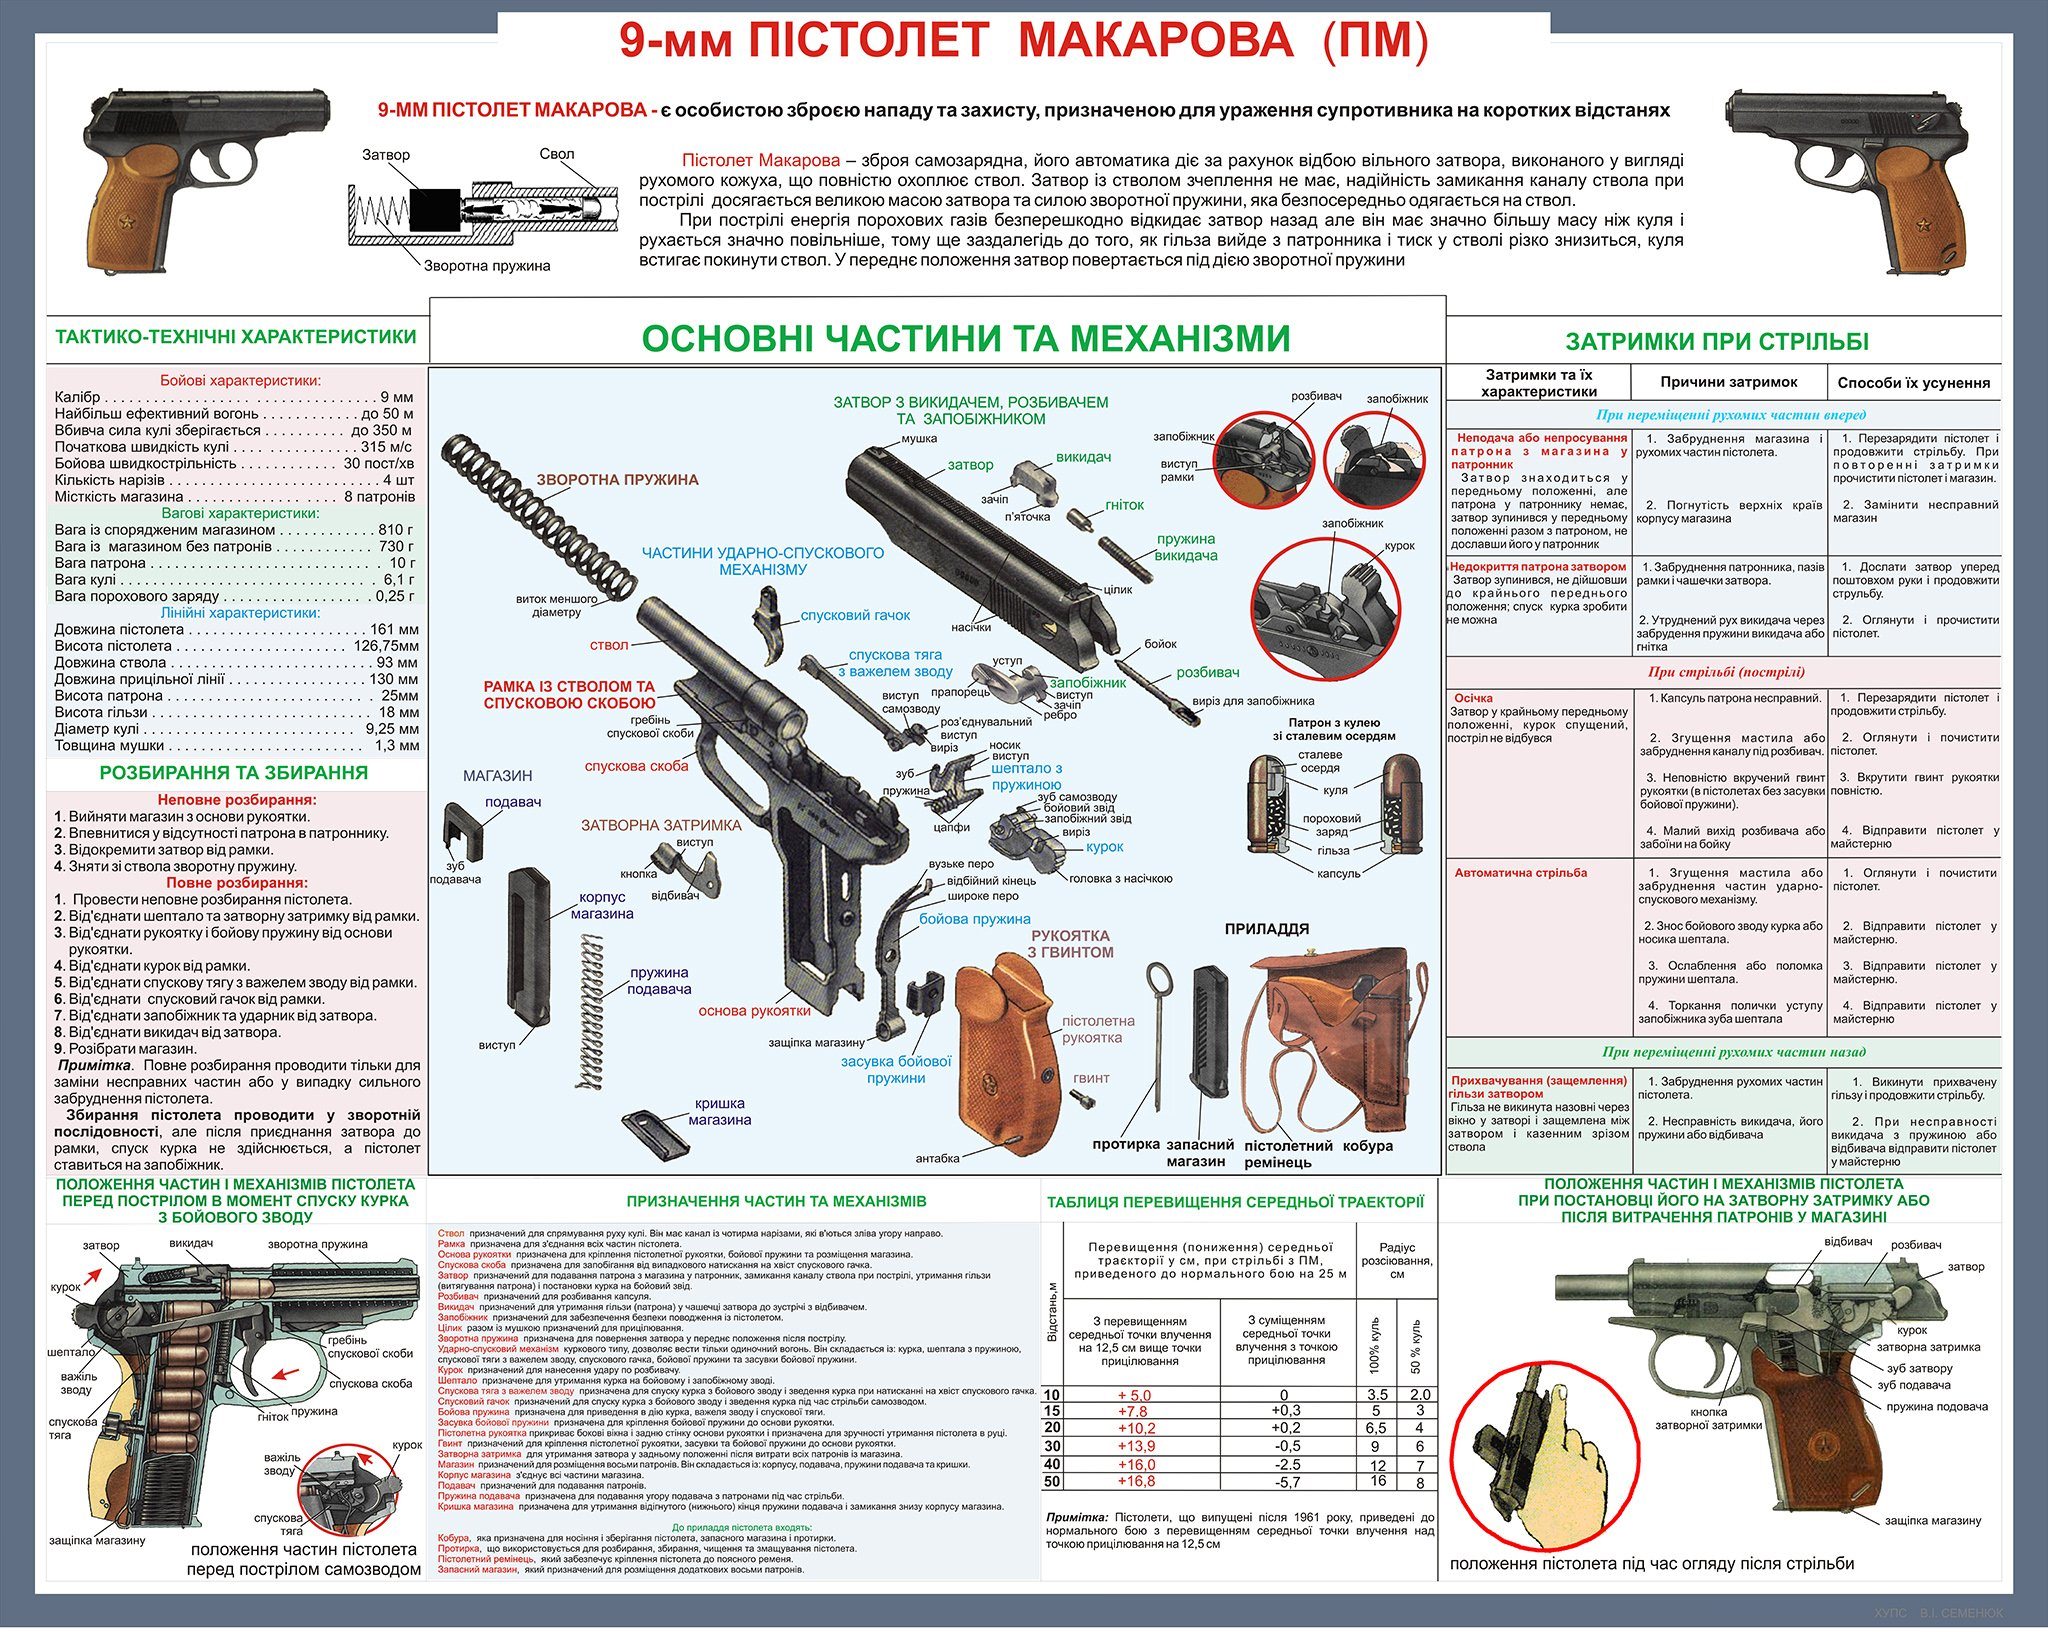 Подготовка к пм. ТТХ ПМ 9мм Макарова. Характеристика пистолета Макарова 9 мм. ТТХ пистолета Макарова 9.